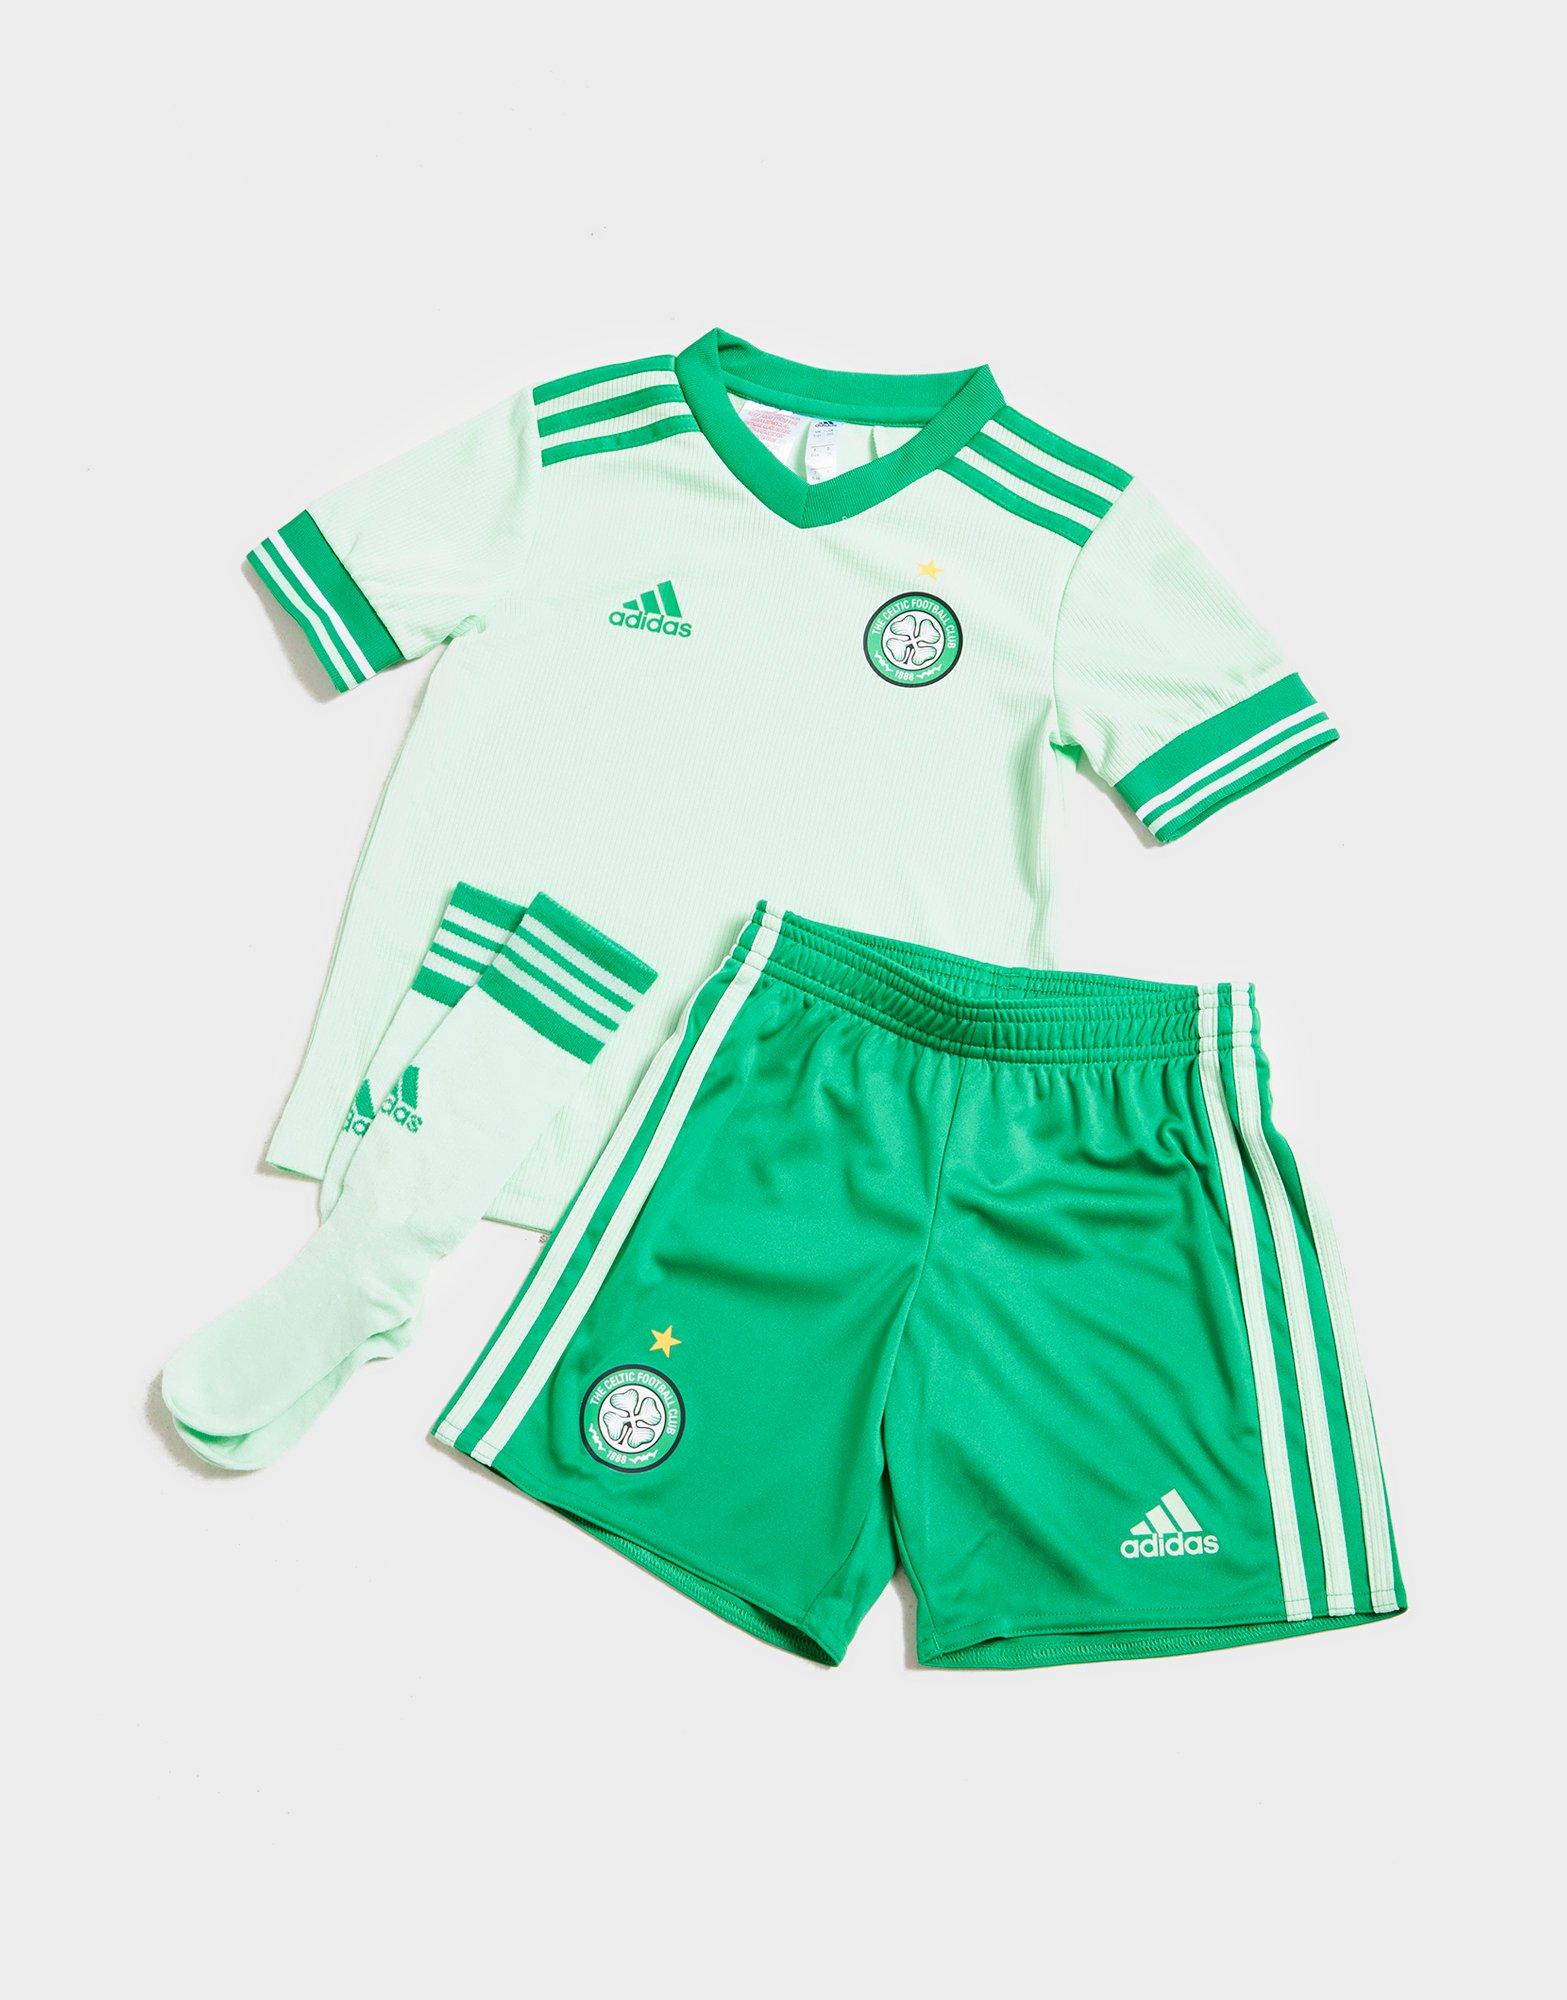 celtic away kit adidas